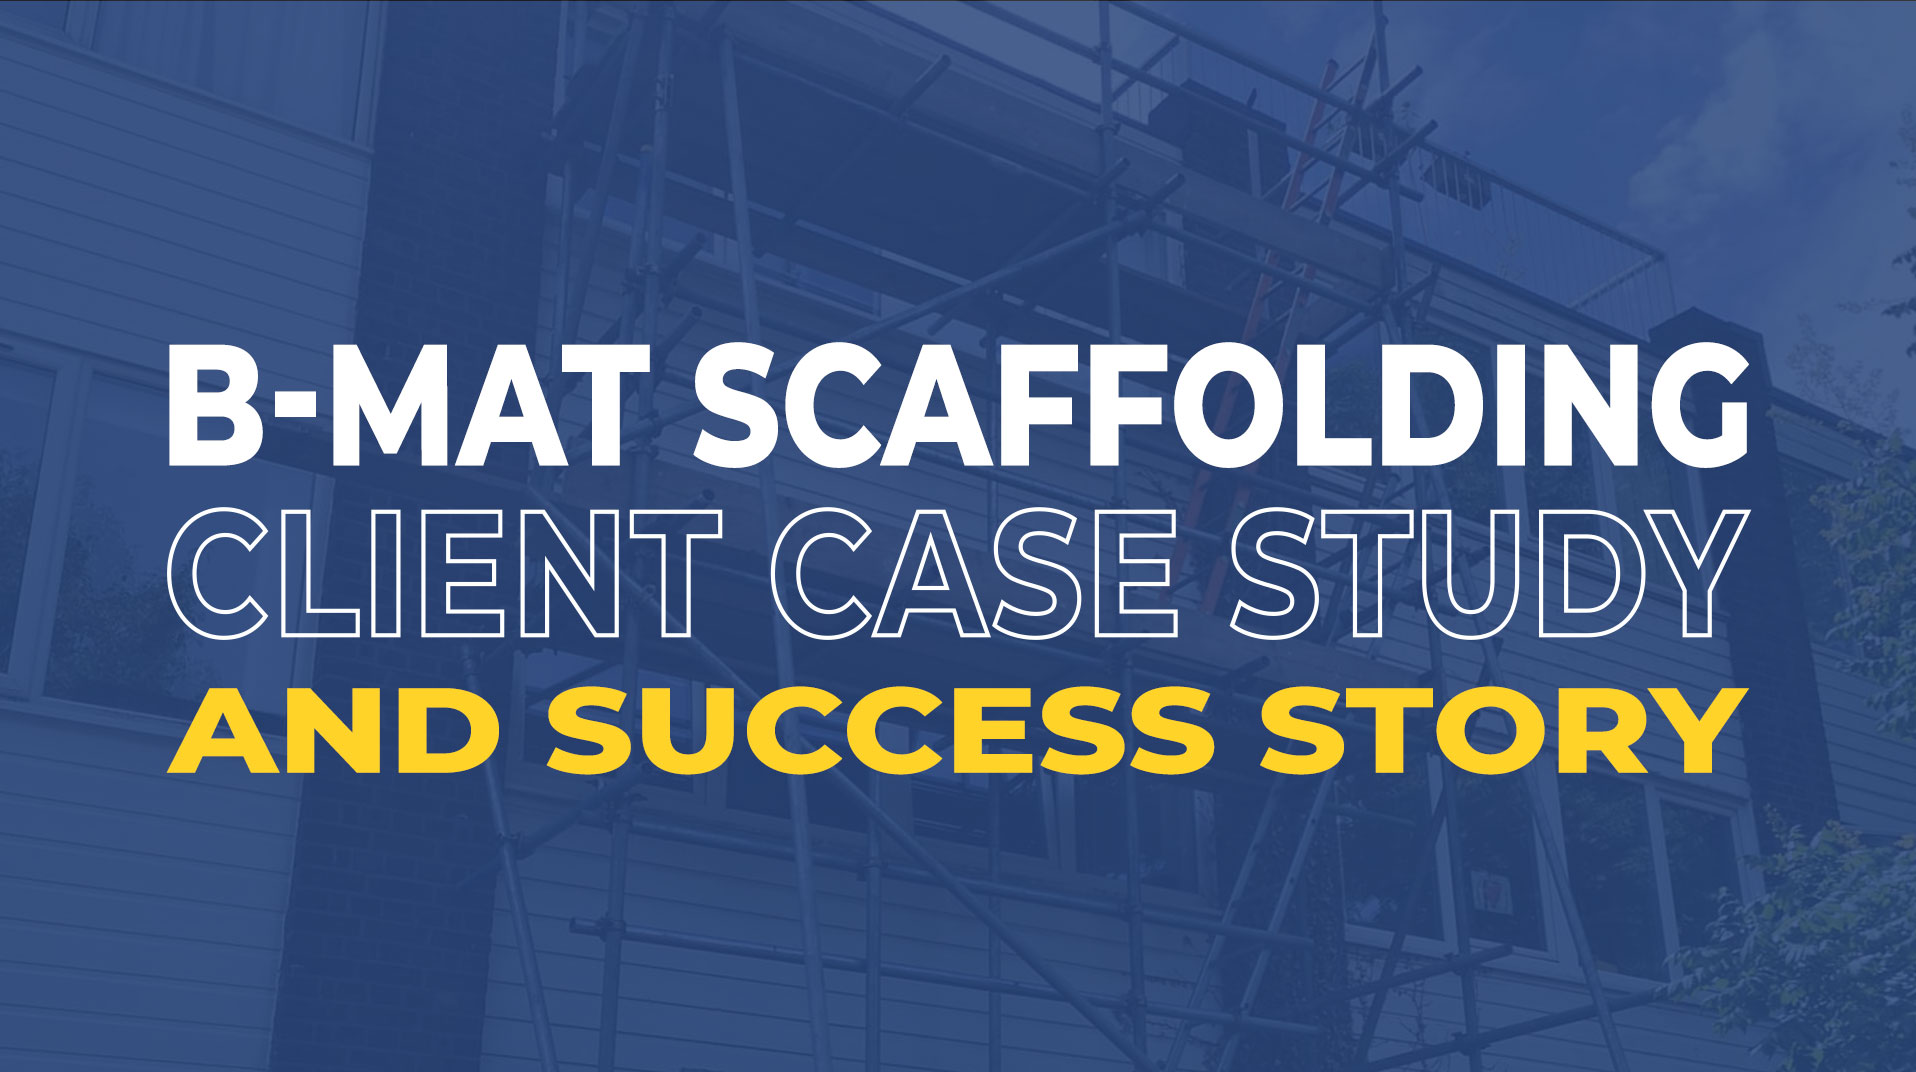 Client Case Study: B-Mat Scaffolding’s Success Story